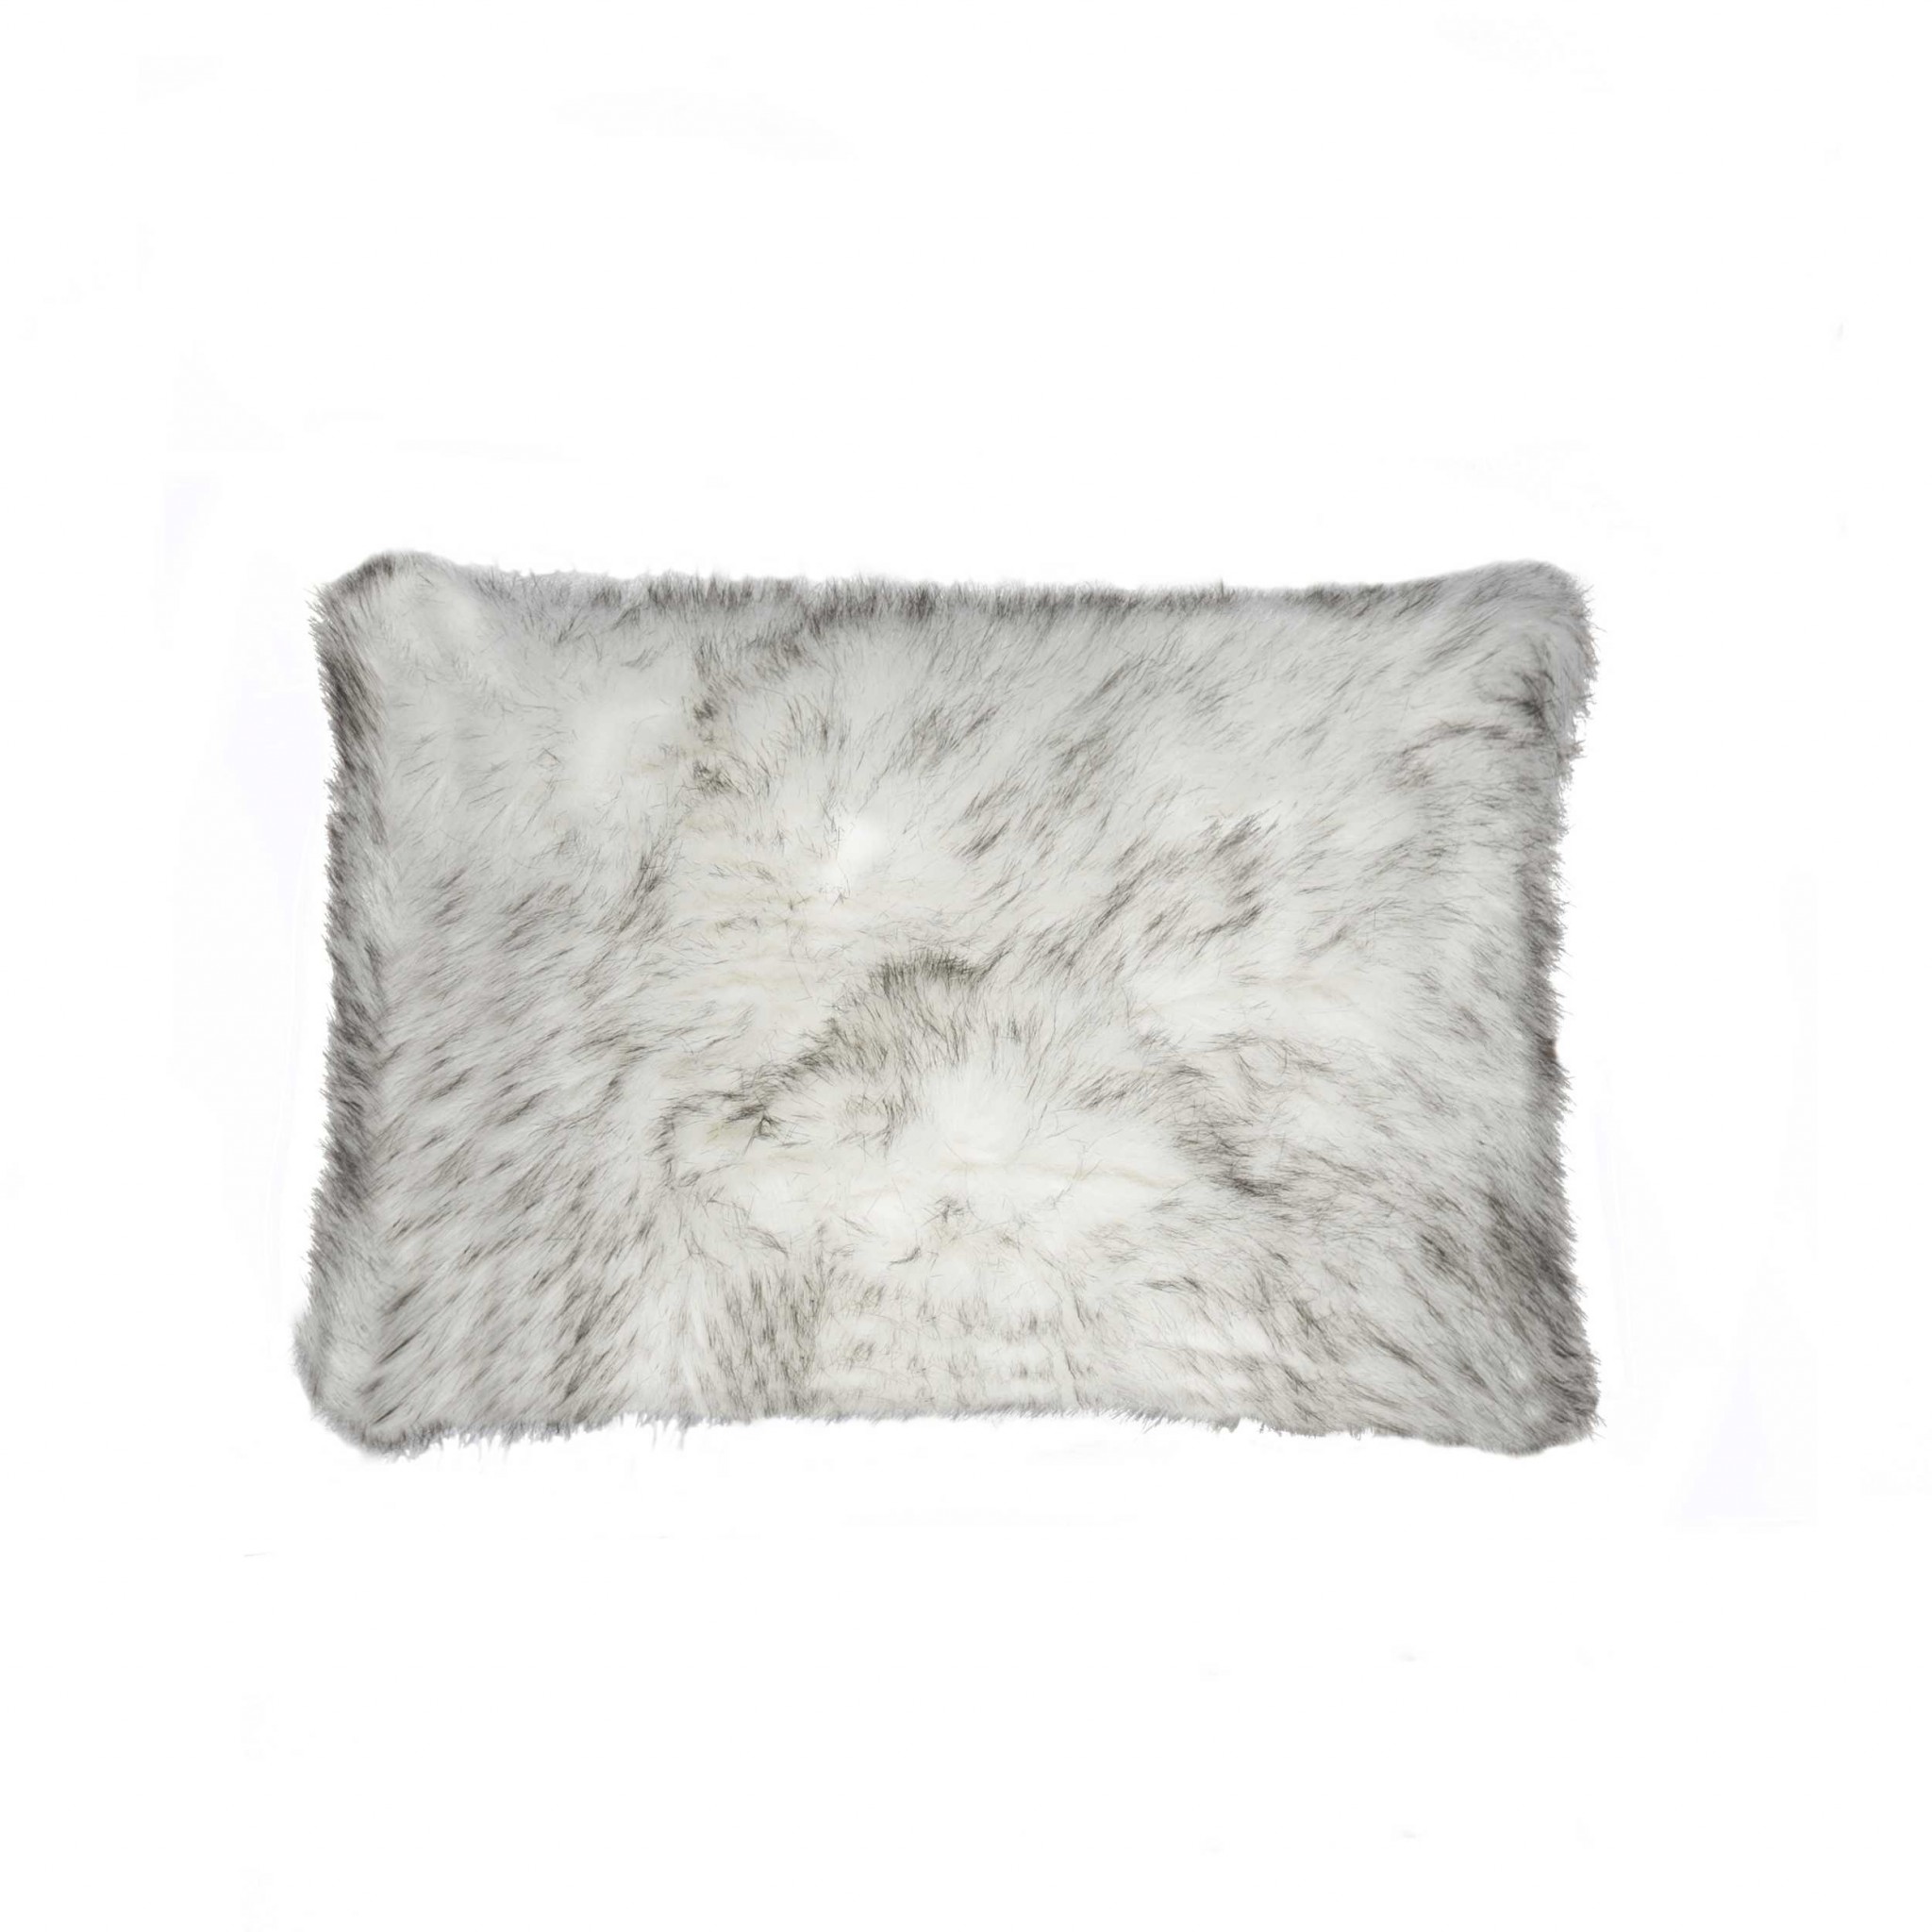 12" x 20" x 5" Gradient Gray Faux Fur - Pillow